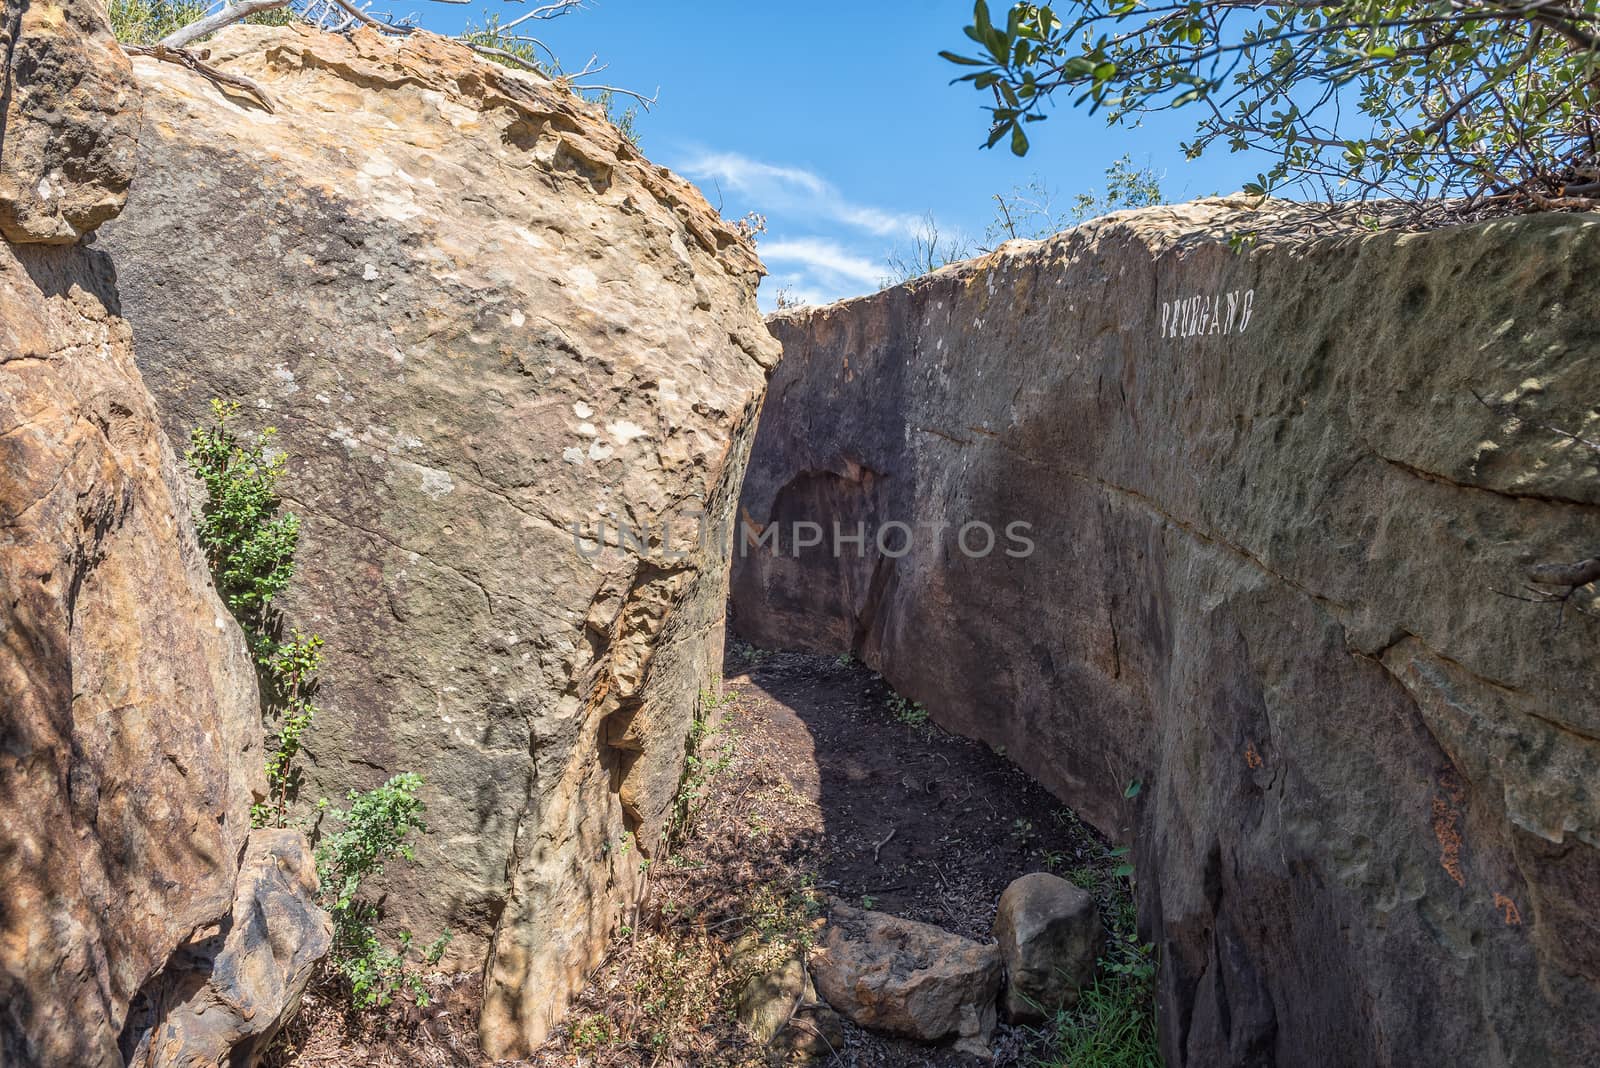 The Eland Hiking Trail passing through a rock formation, called Drukgang, at Eingedi near Ladybrand